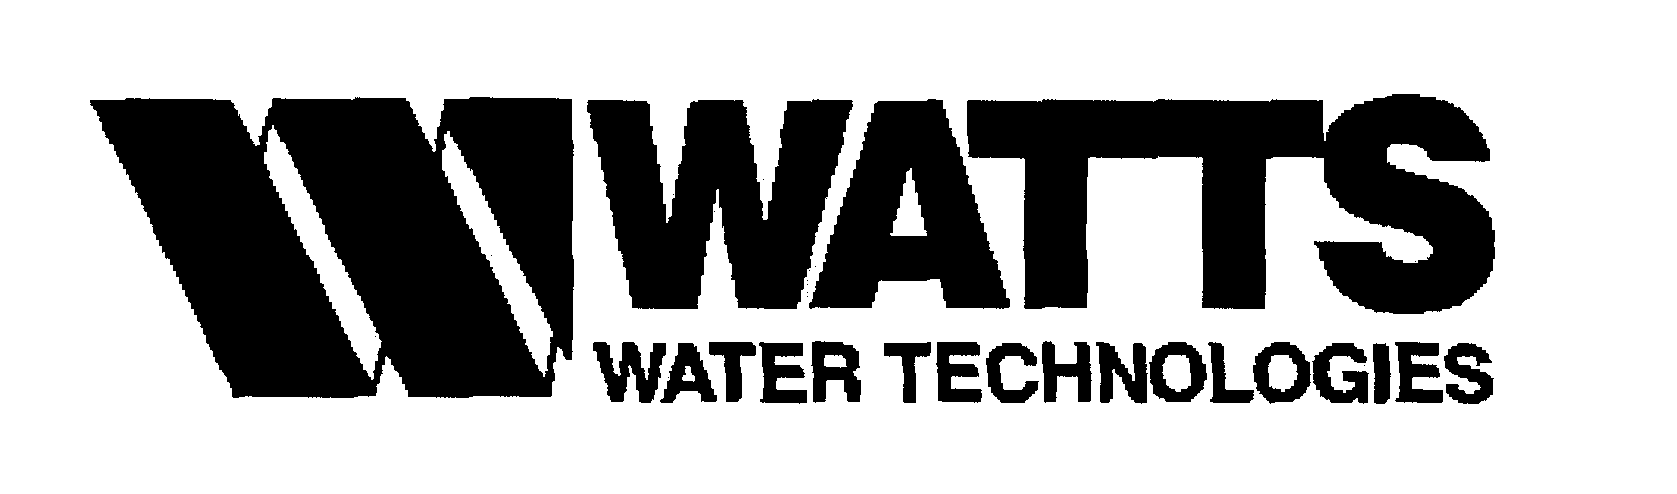  W WATTS WATER TECHNOLOGIES